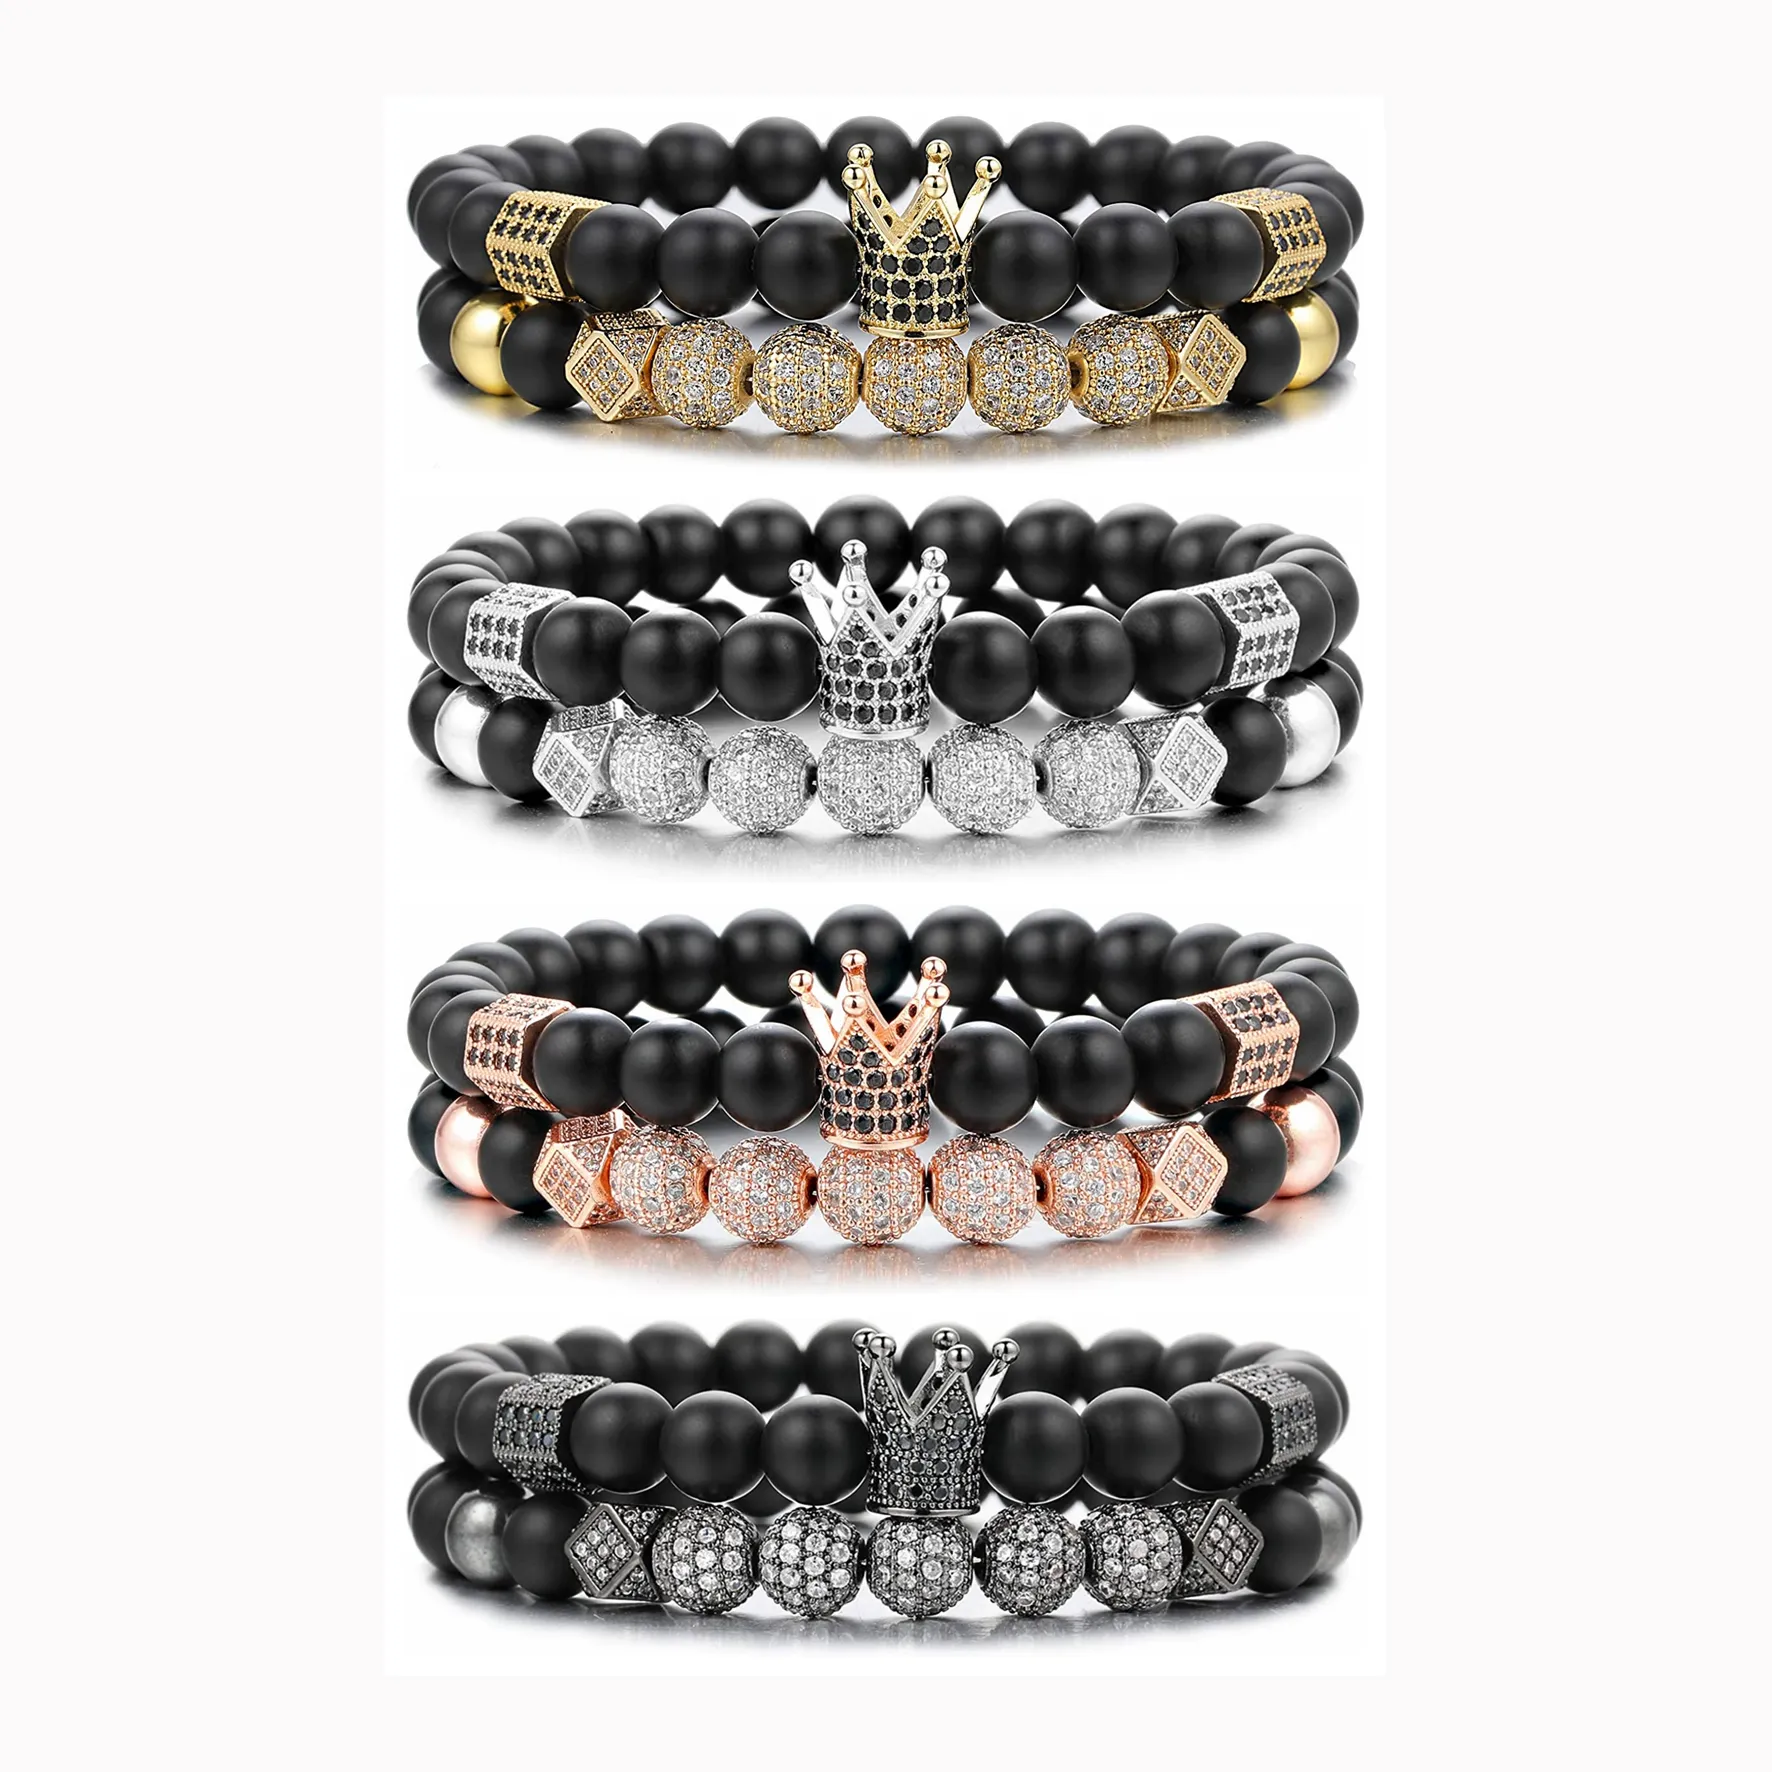 Black Onyx Bracelet 8mm Beads, Set of 4 Pieces | gemstone/crystal Jewelry | Mother's Day/Birthday/Anniversary/Valentine's Day Gift